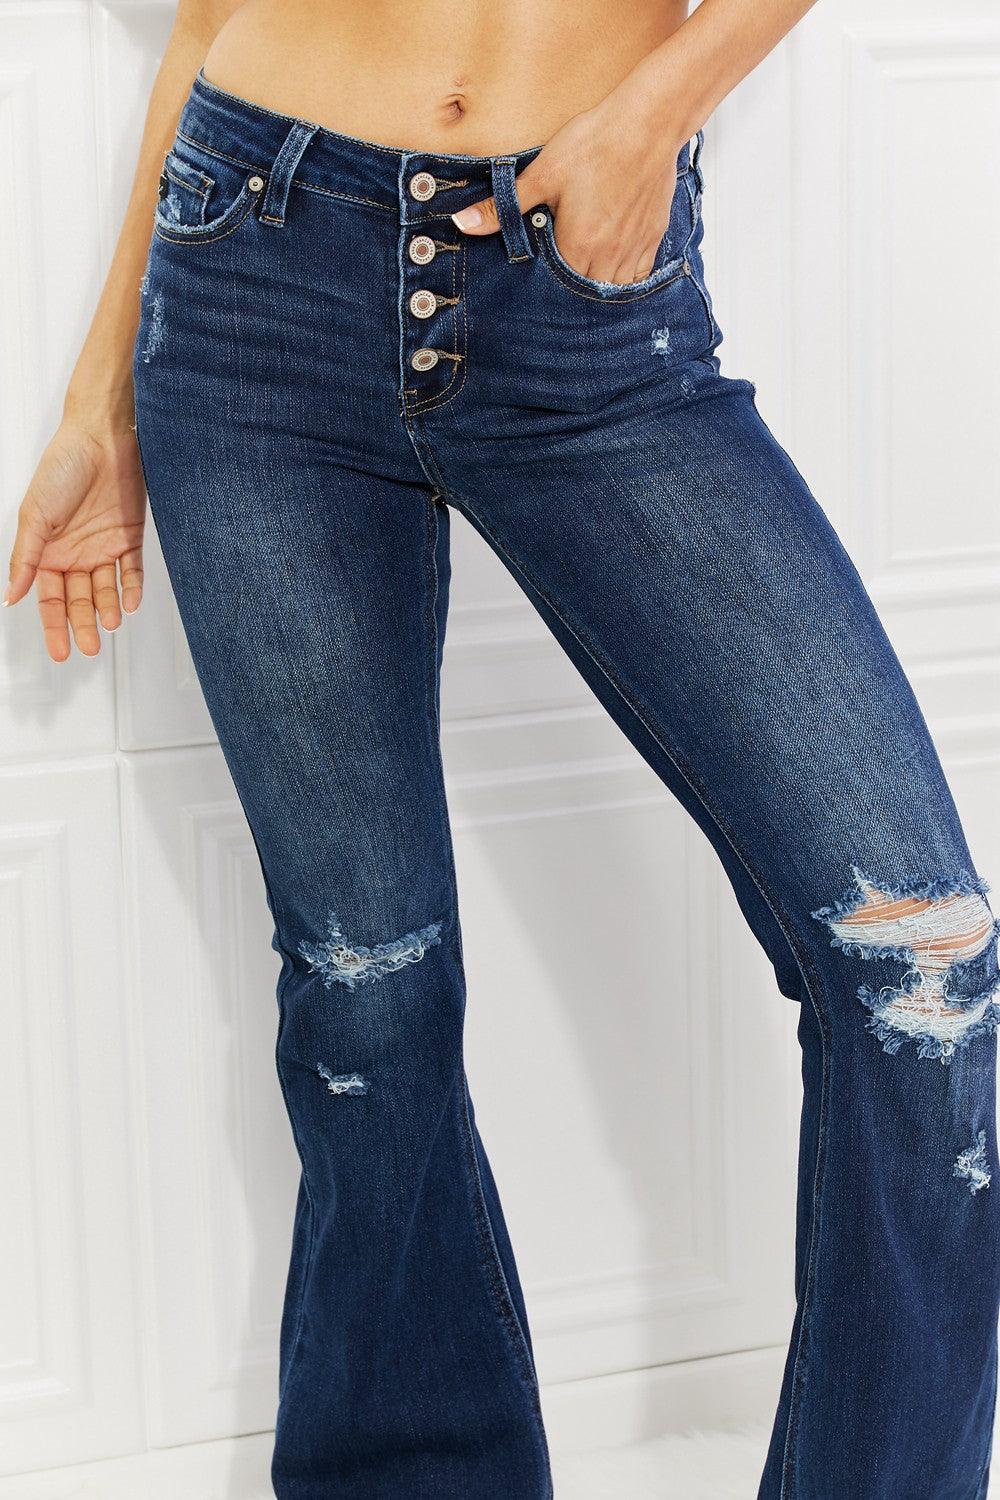 Bona Fide Fashion - Full Size Reese Midrise Button Fly Flare Jeans - Women Fashion - Bona Fide Fashion